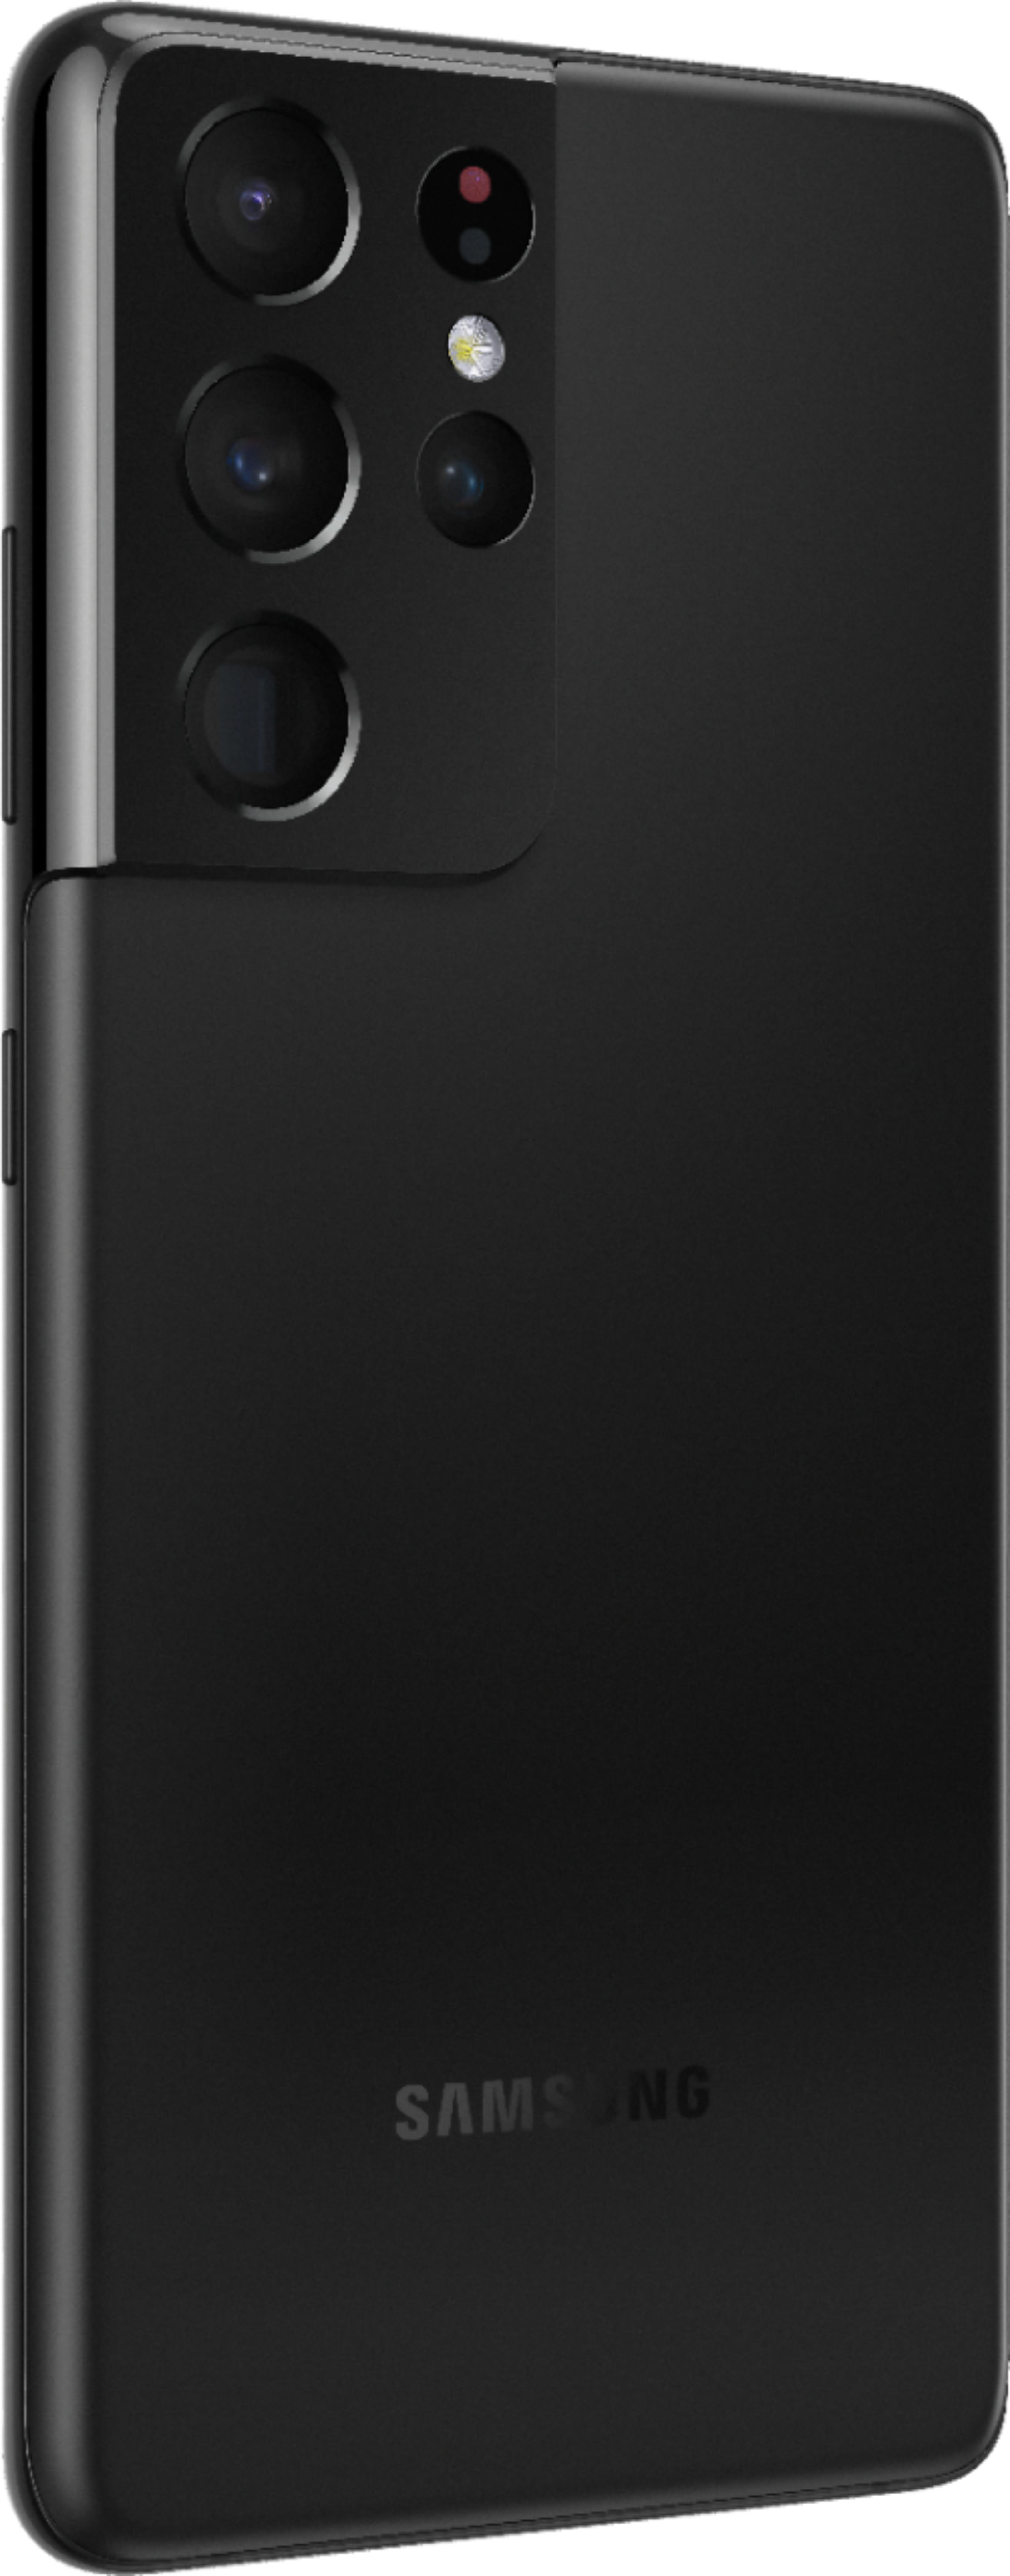 Samsung Galaxy S21 Ultra 5g 128gb Phantom Black Verizon Sm G998uzkavzw Best Buy